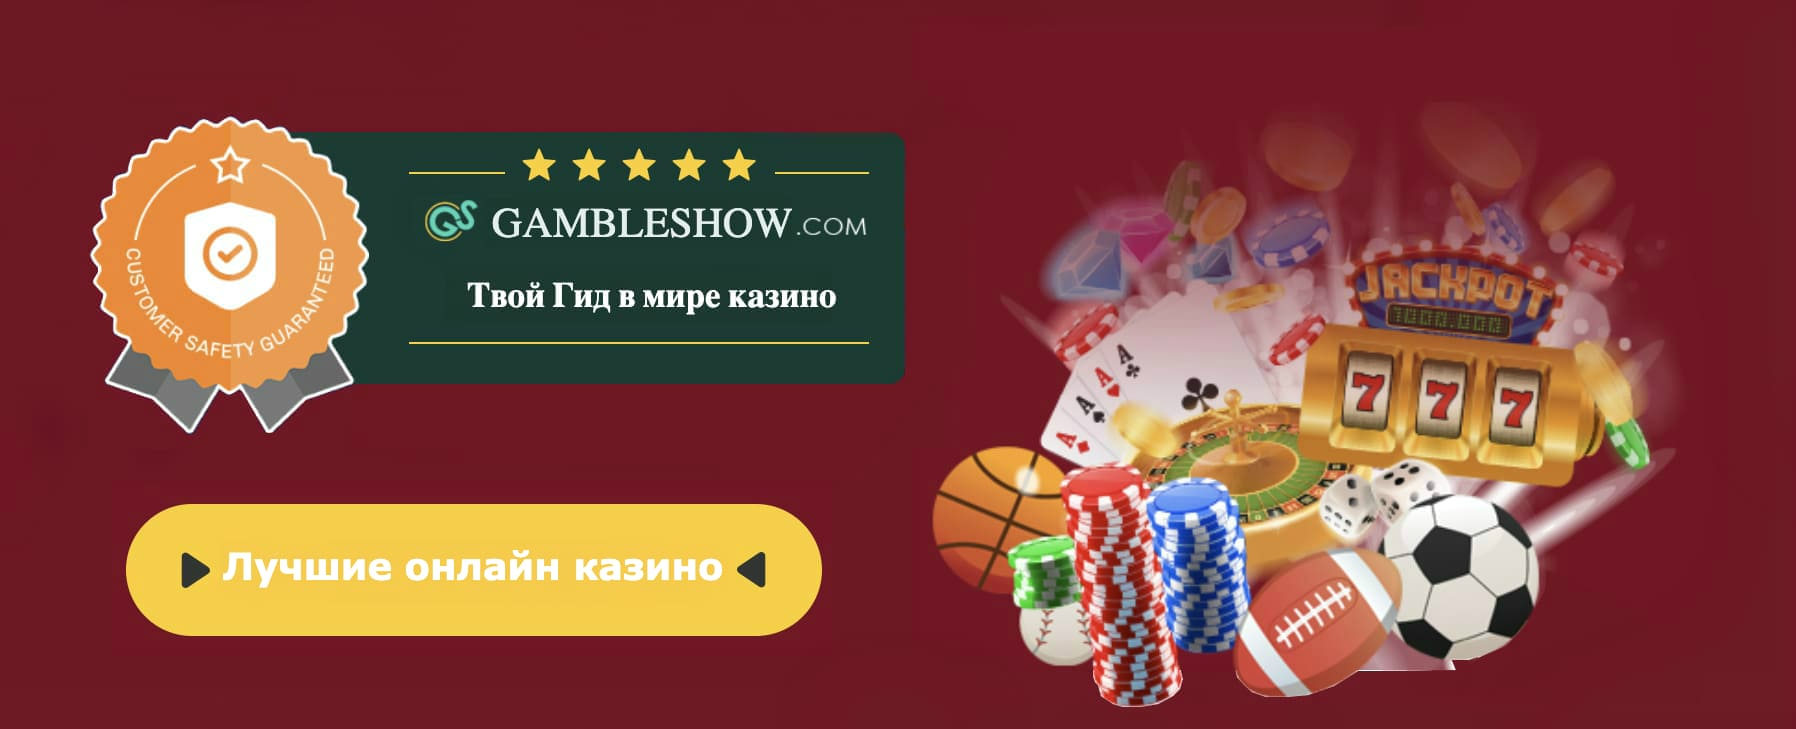 Juegos de casino king kong cash gratis